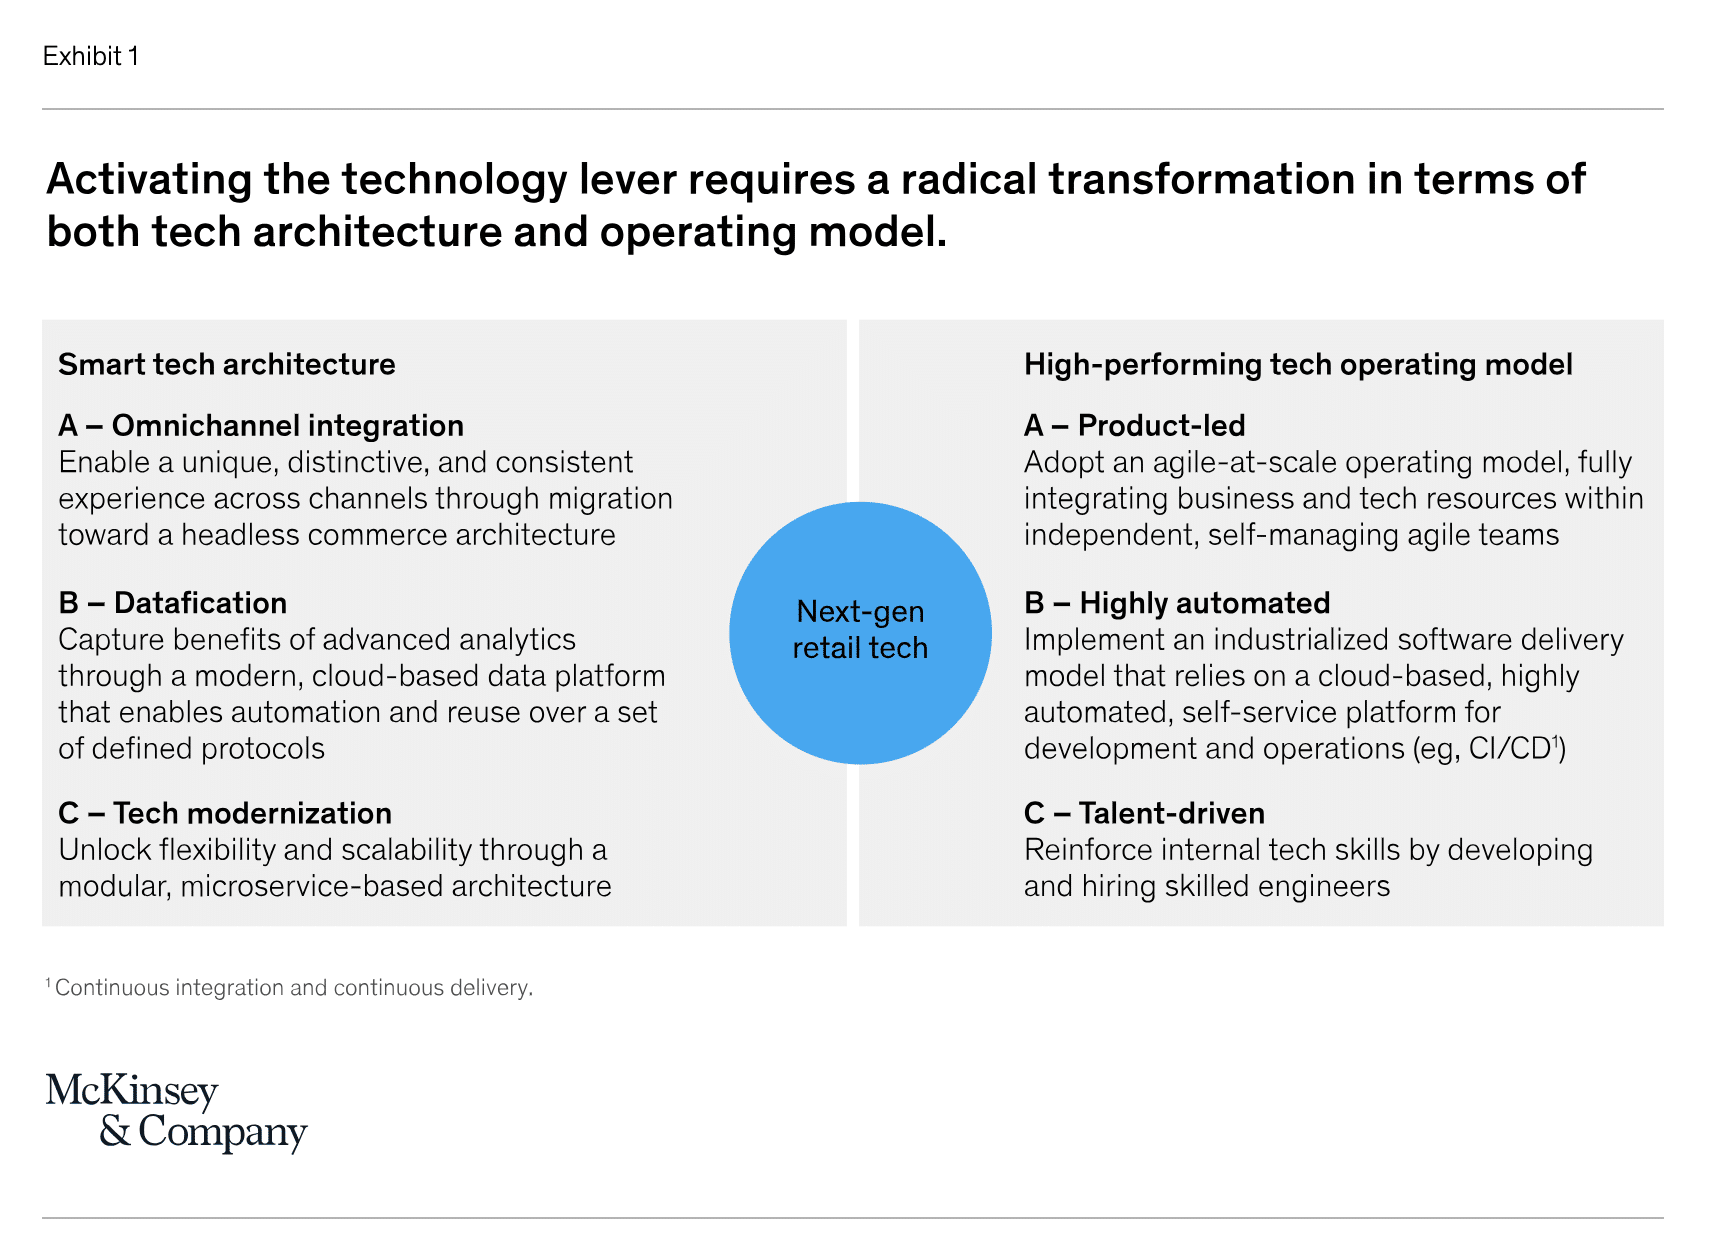 mckinsey-architecture-operating-model